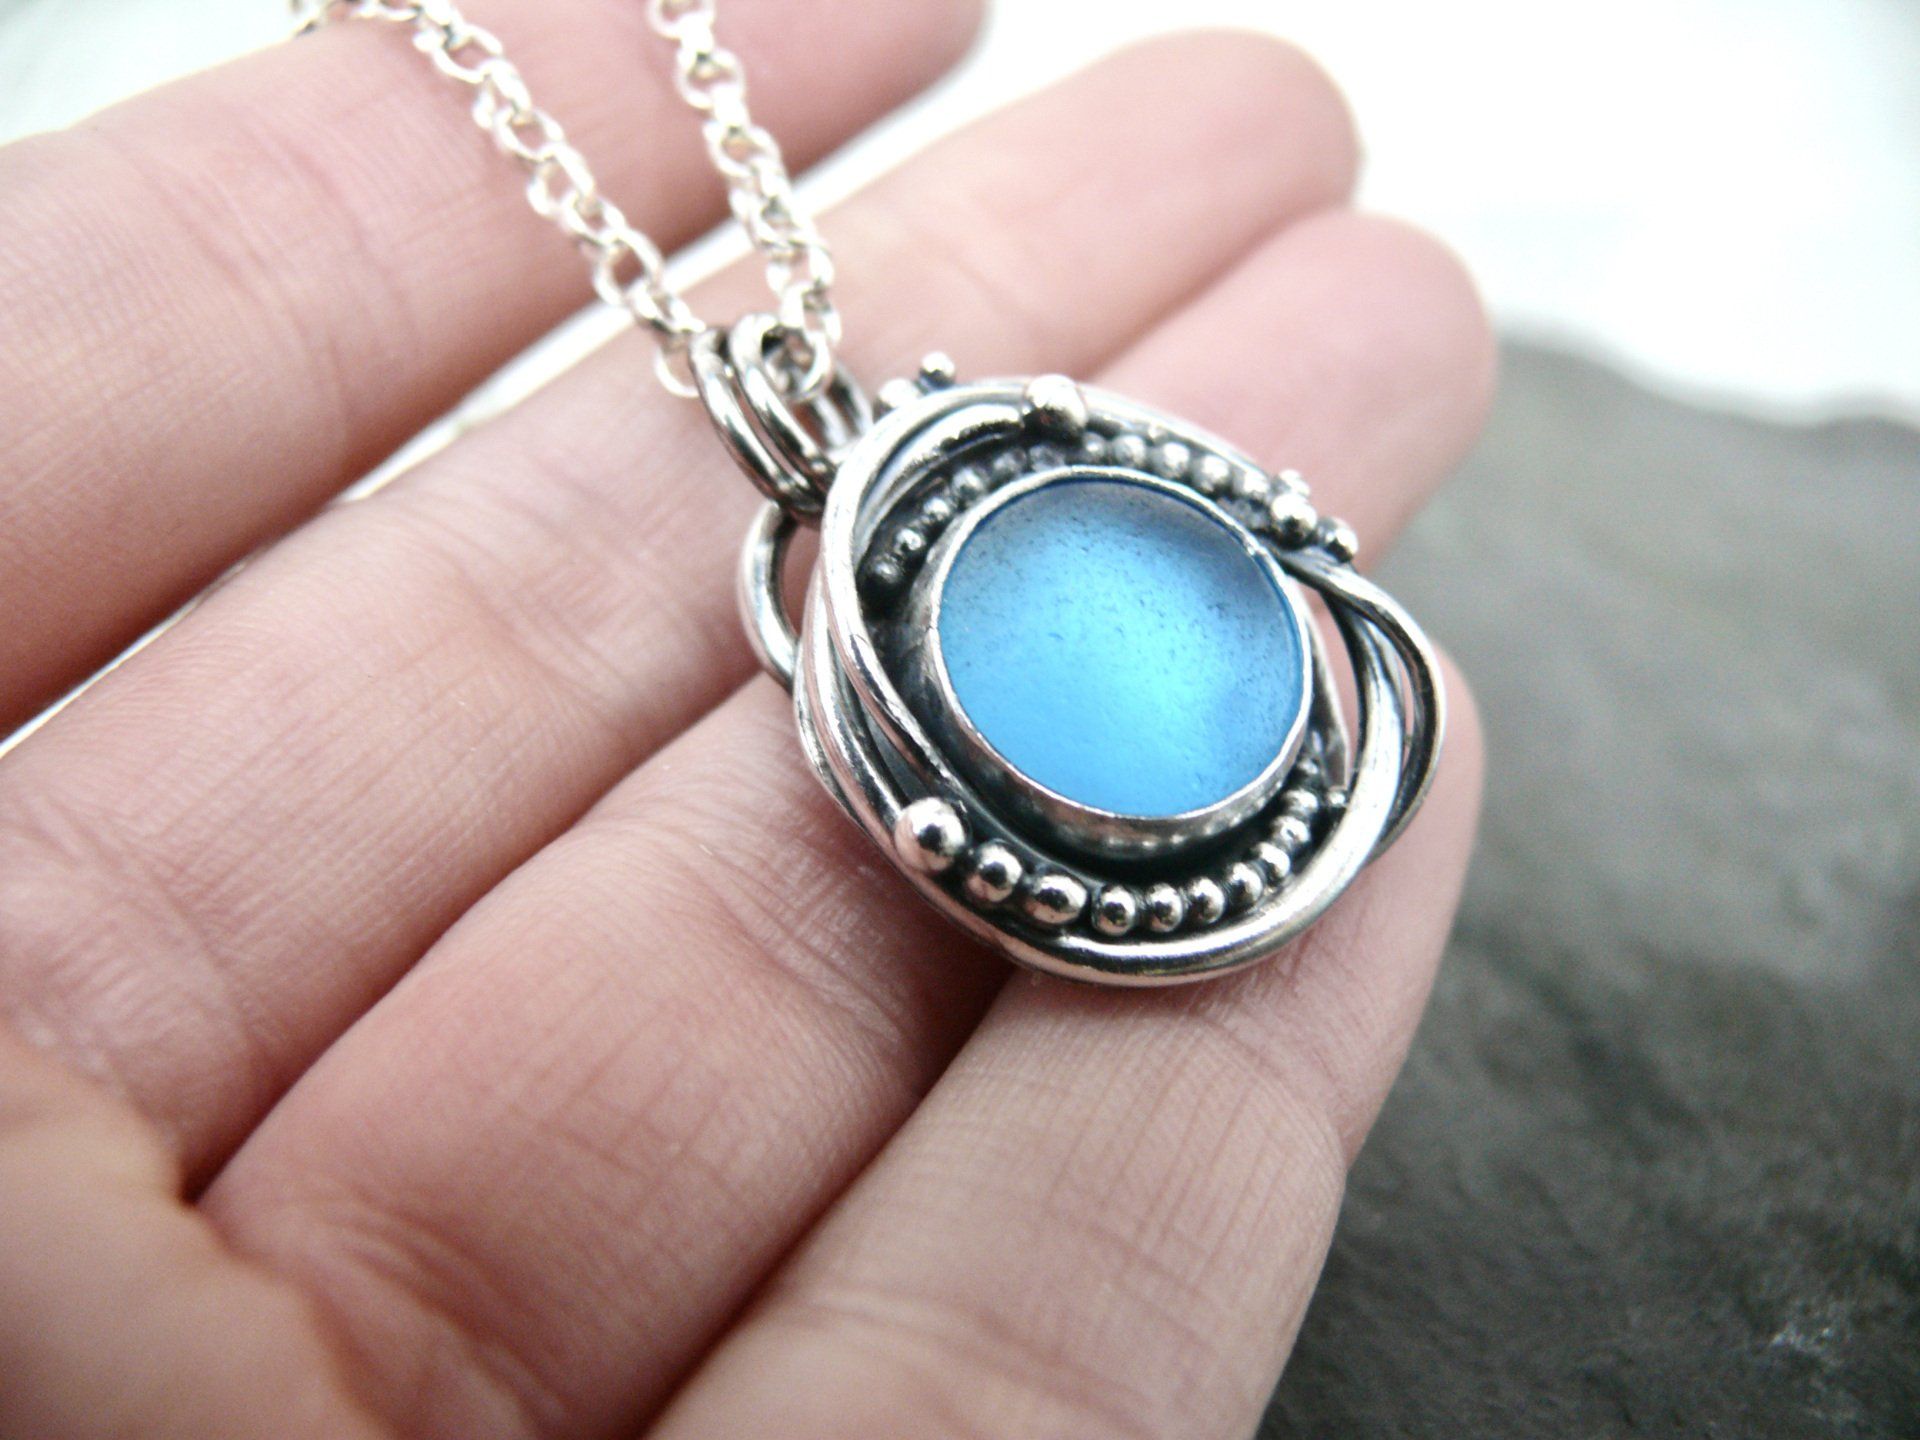 scottish sea glass necklace made in scotland. Blue sea glass with kelpie design